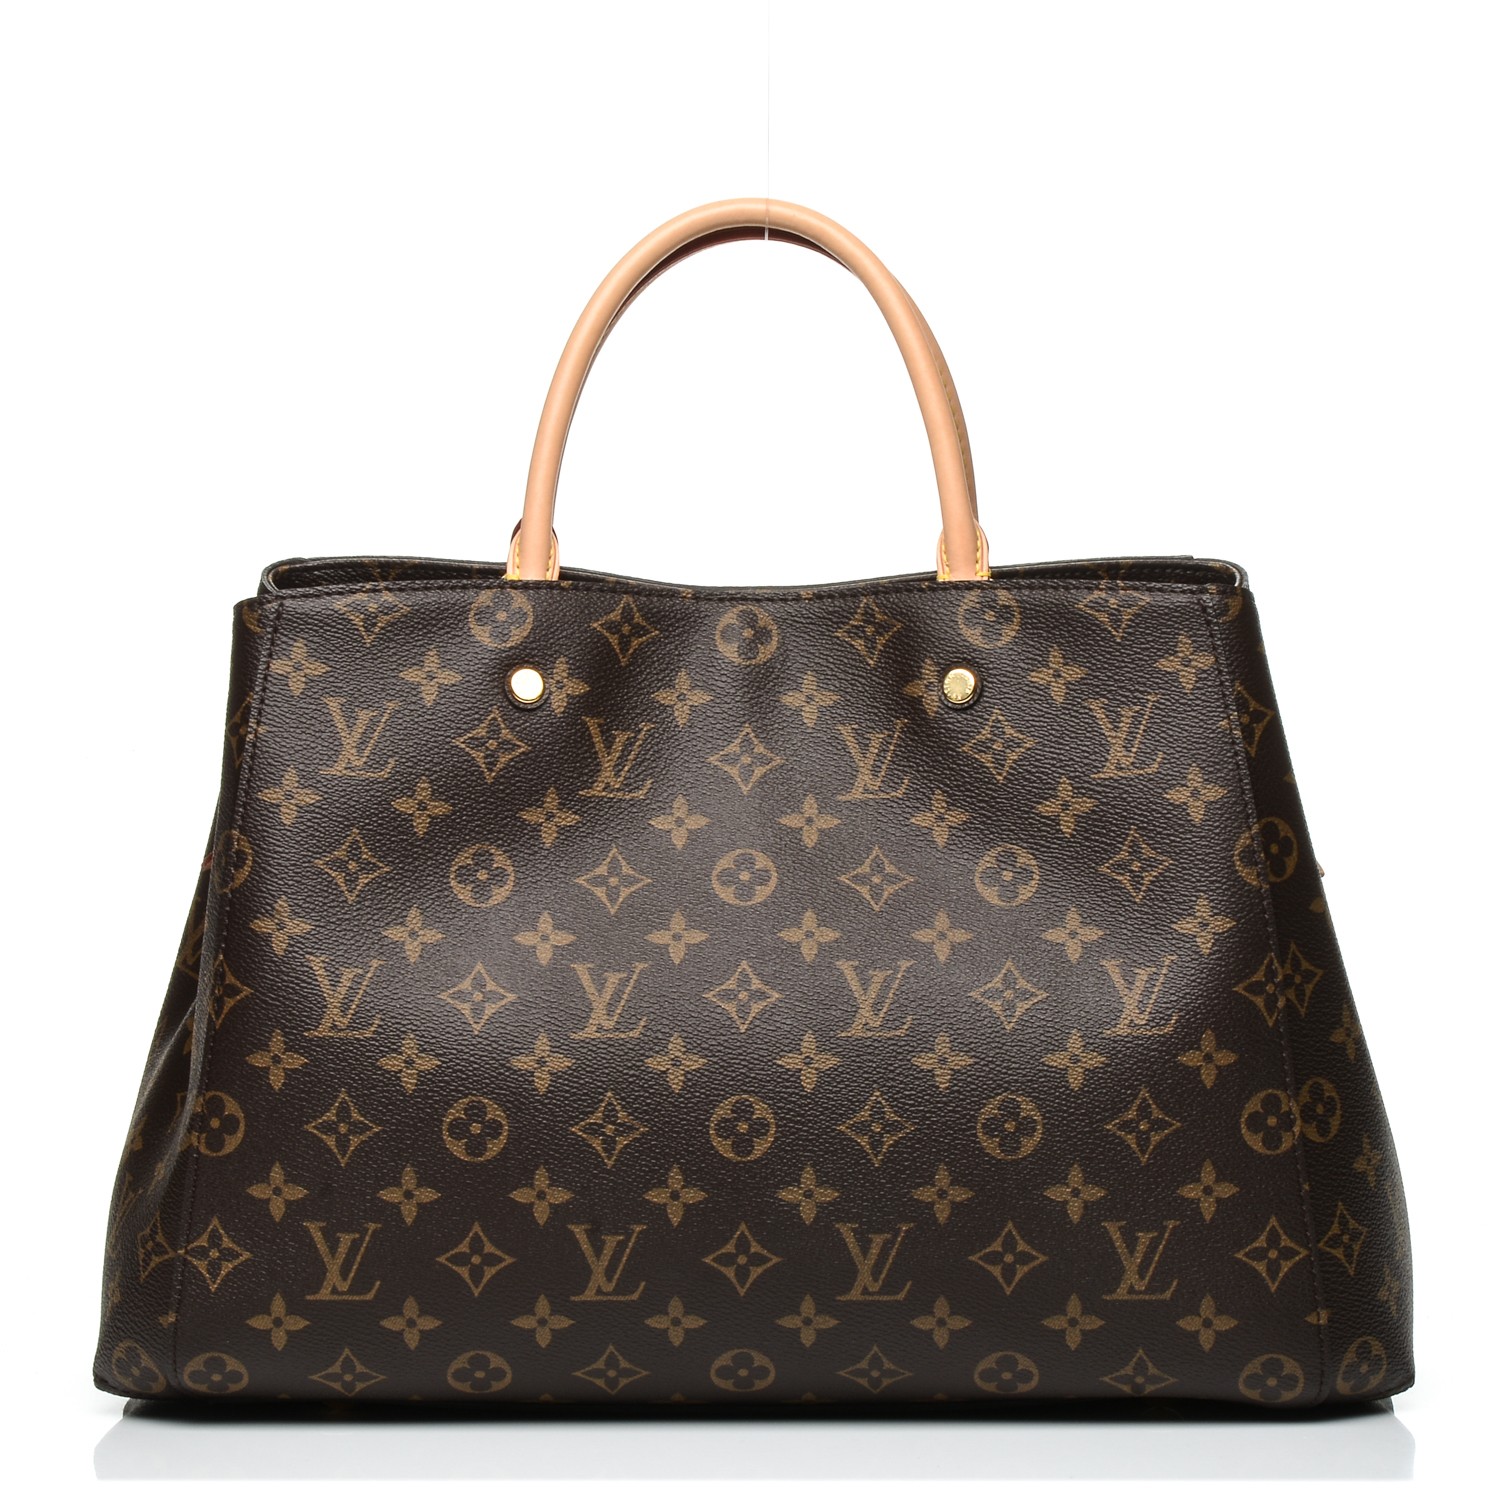 Buy Louis Vuitton Montaigne Damier Black Handbag - Online